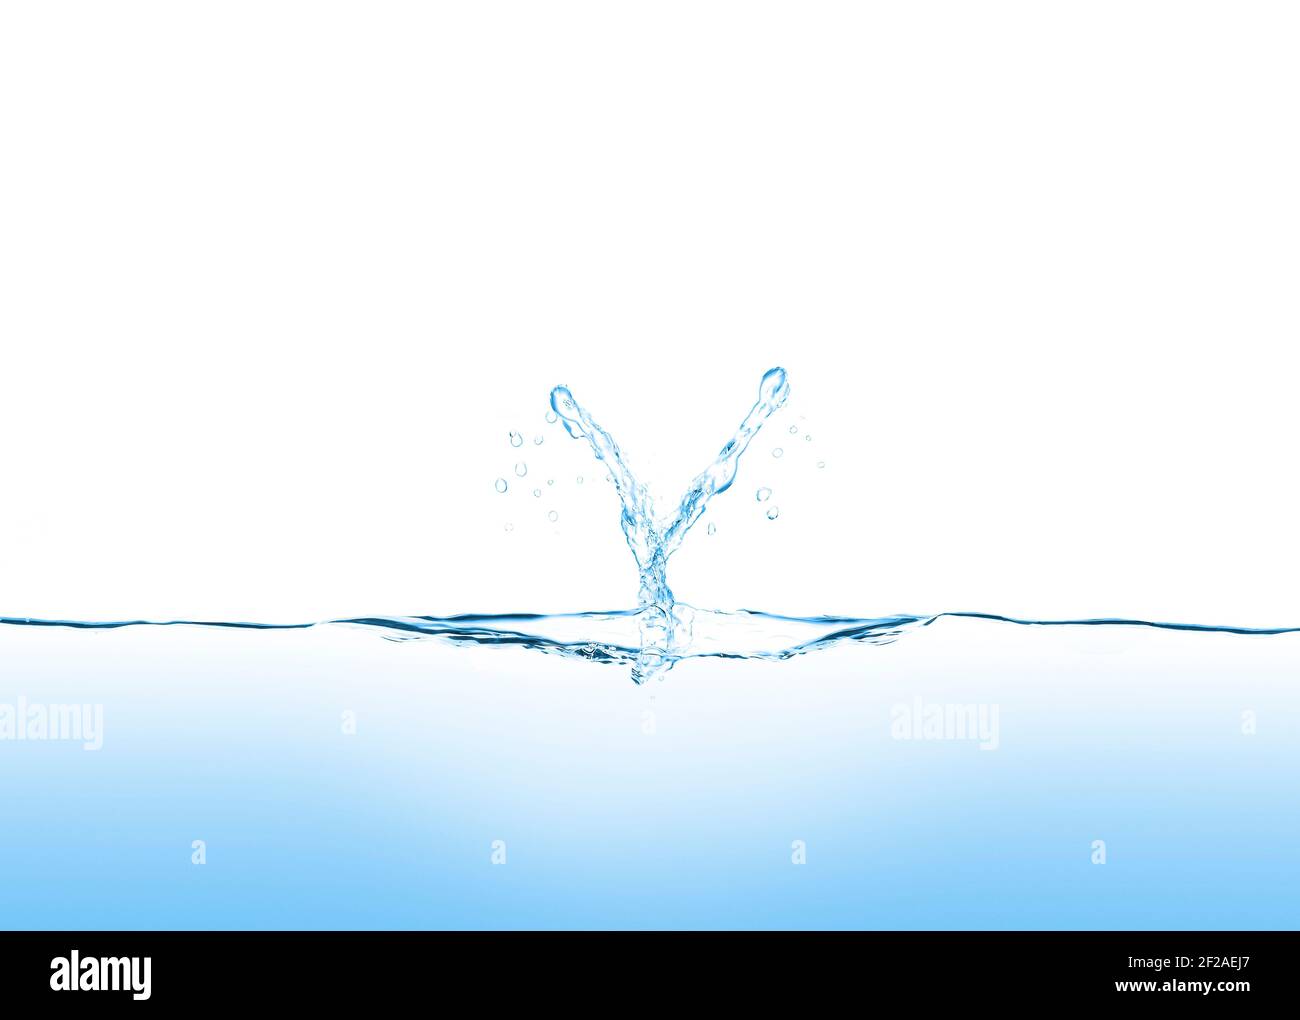 Superficie del agua y forma divertida del agua V concepto de victoria. Fondo útil para combinar objetos Foto de stock